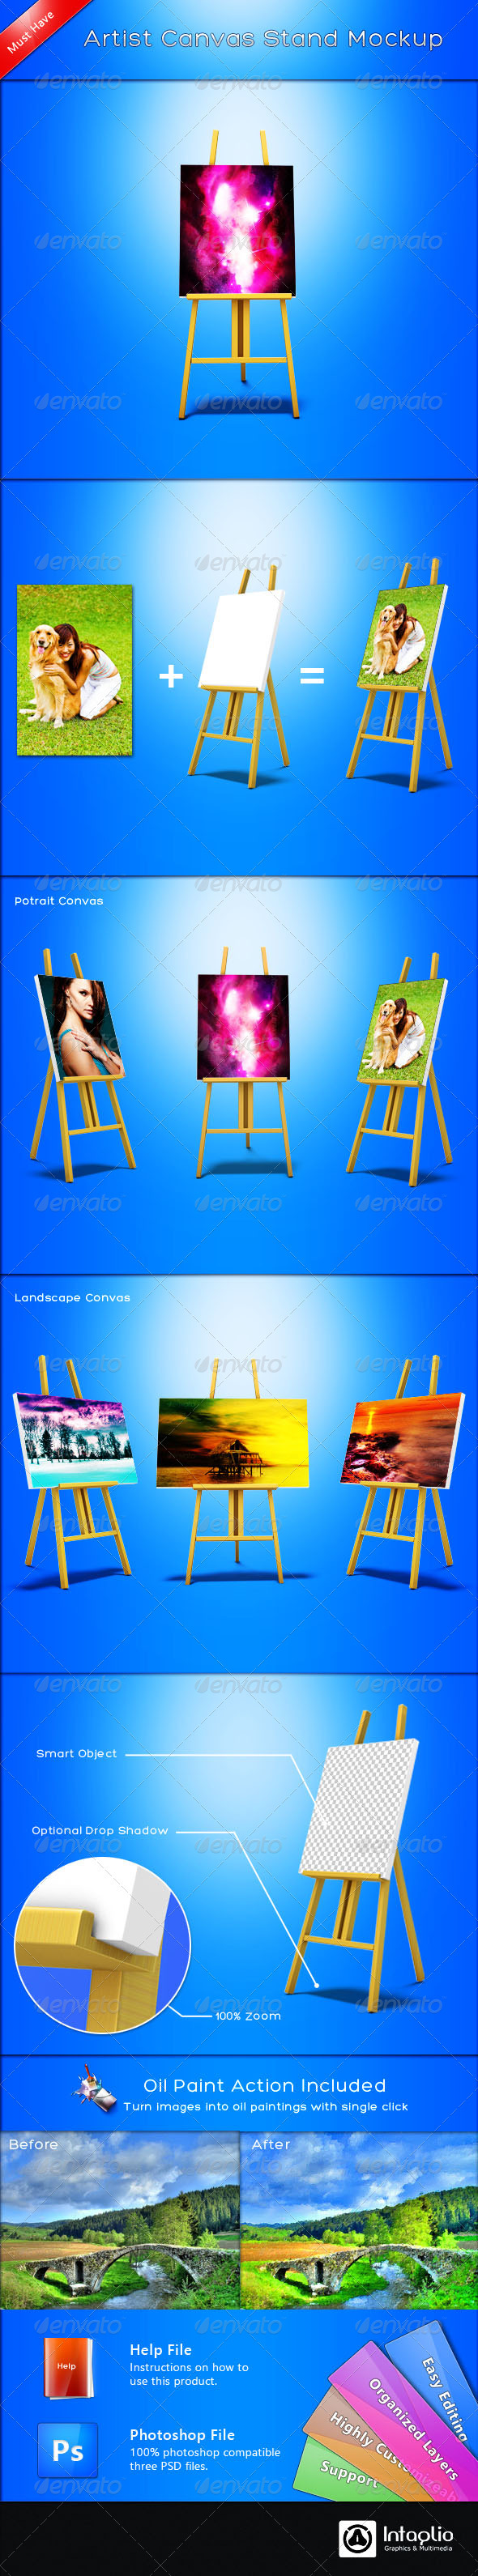 Download Canvas Mockup Graphics Designs Templates From Graphicriver PSD Mockup Templates